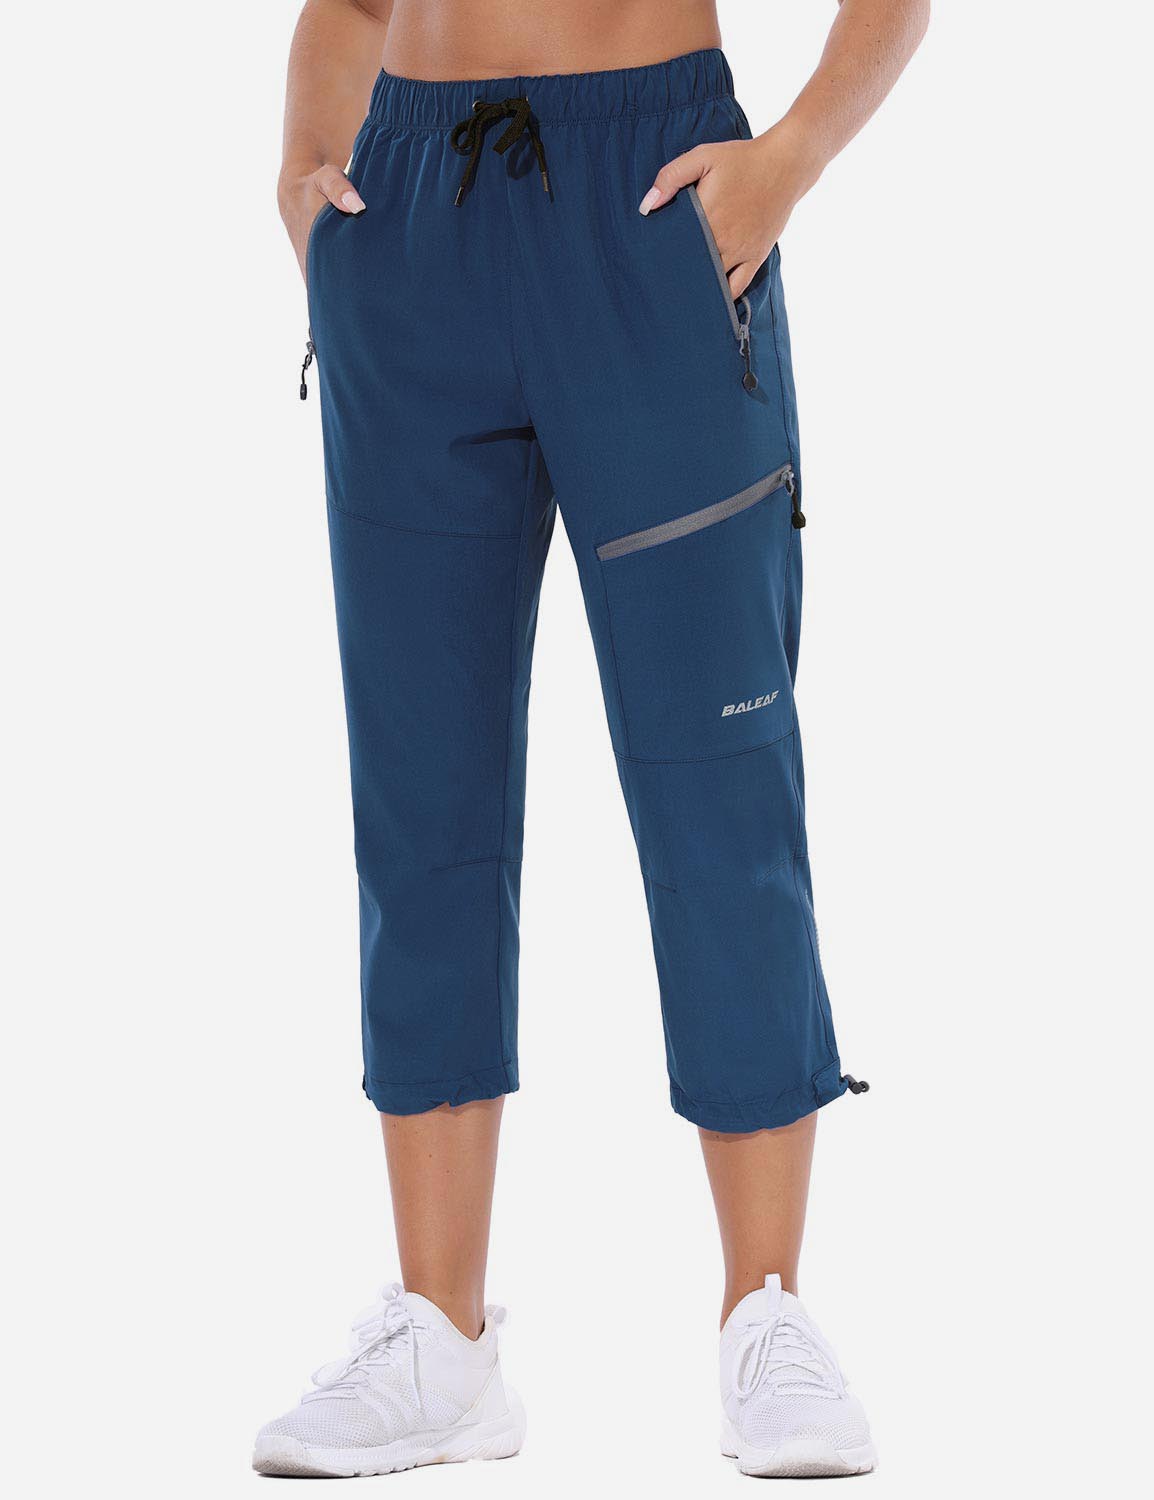 Baleaf Women's UPF50+ Adjustable Waist & Leg Outdoor Capris agb014 Navy Blue Side